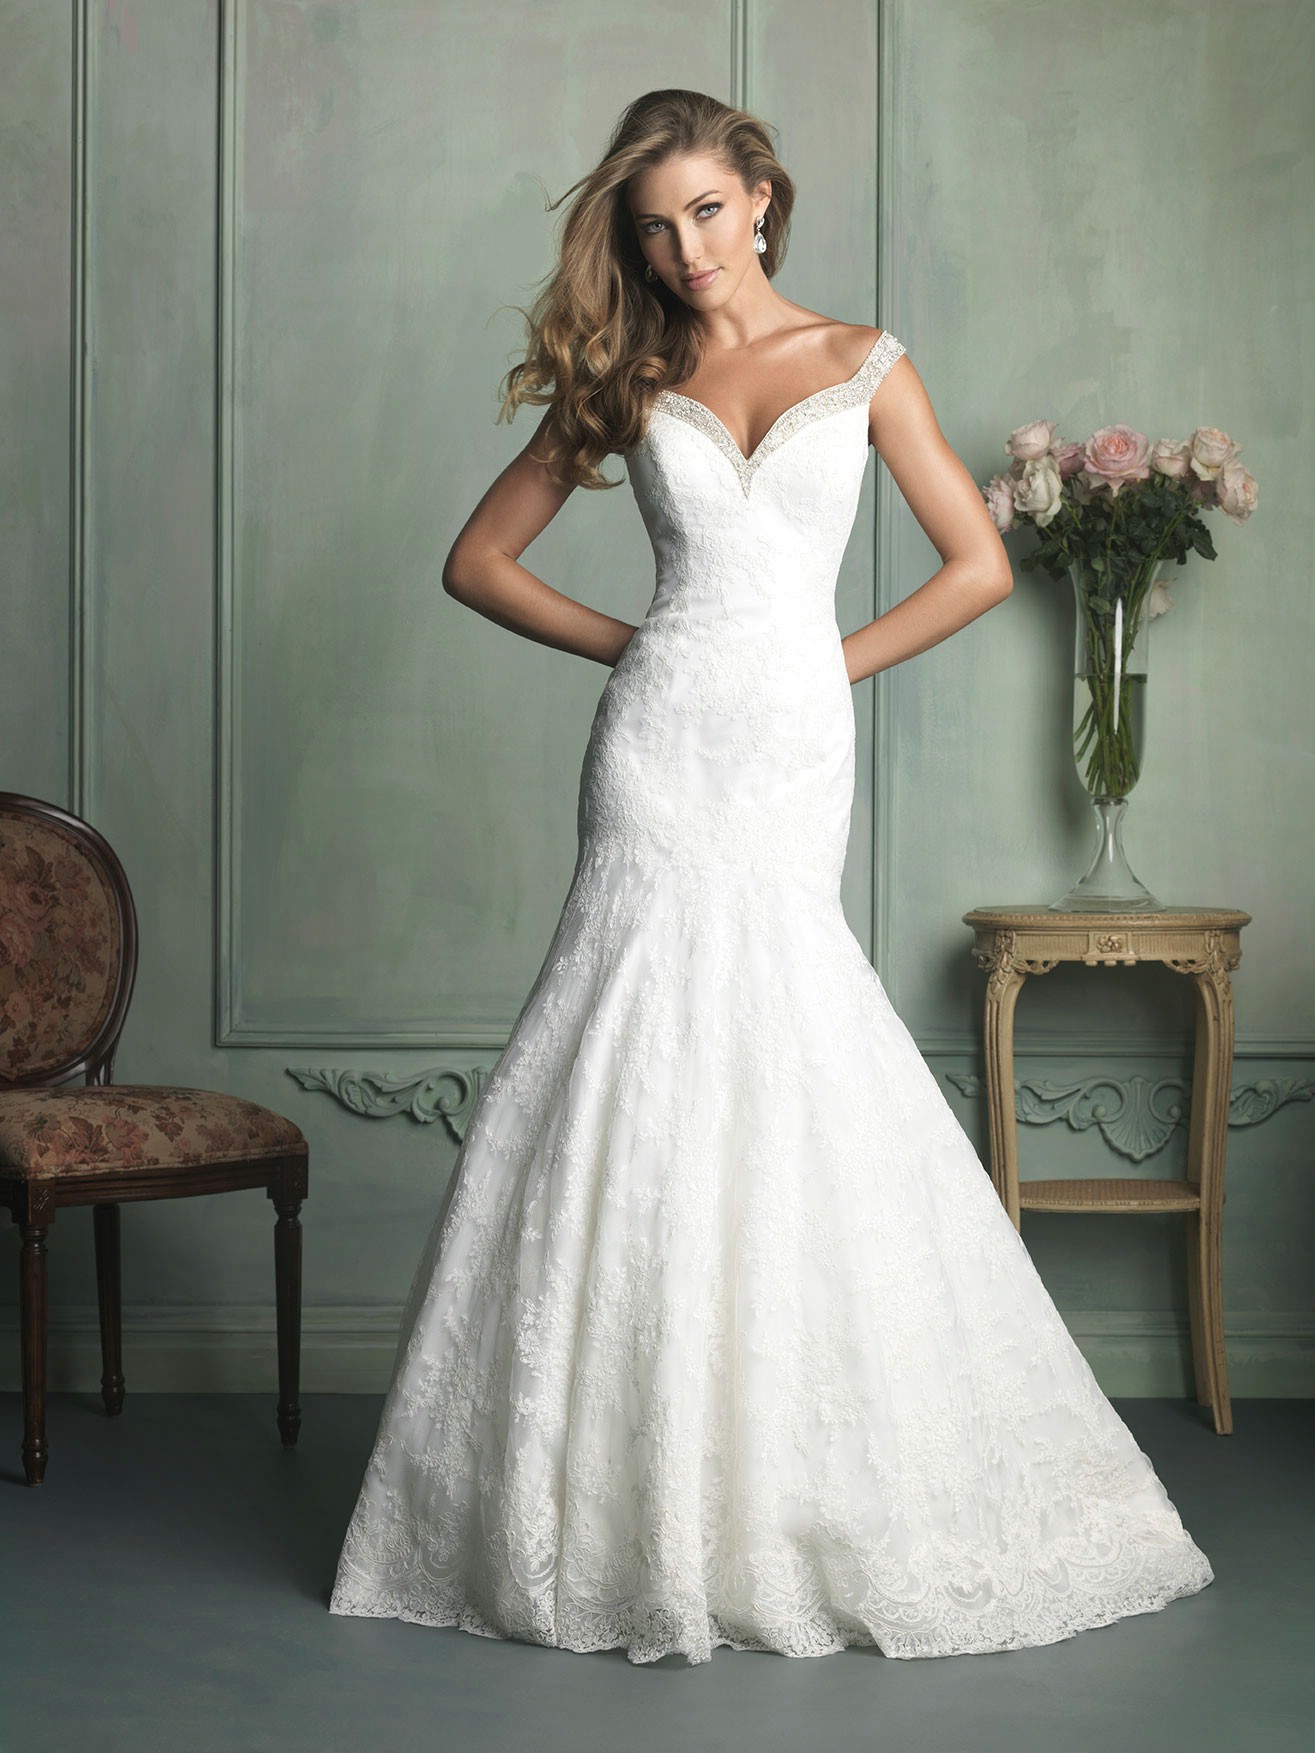 White Wedding Dress – Types of Necklines